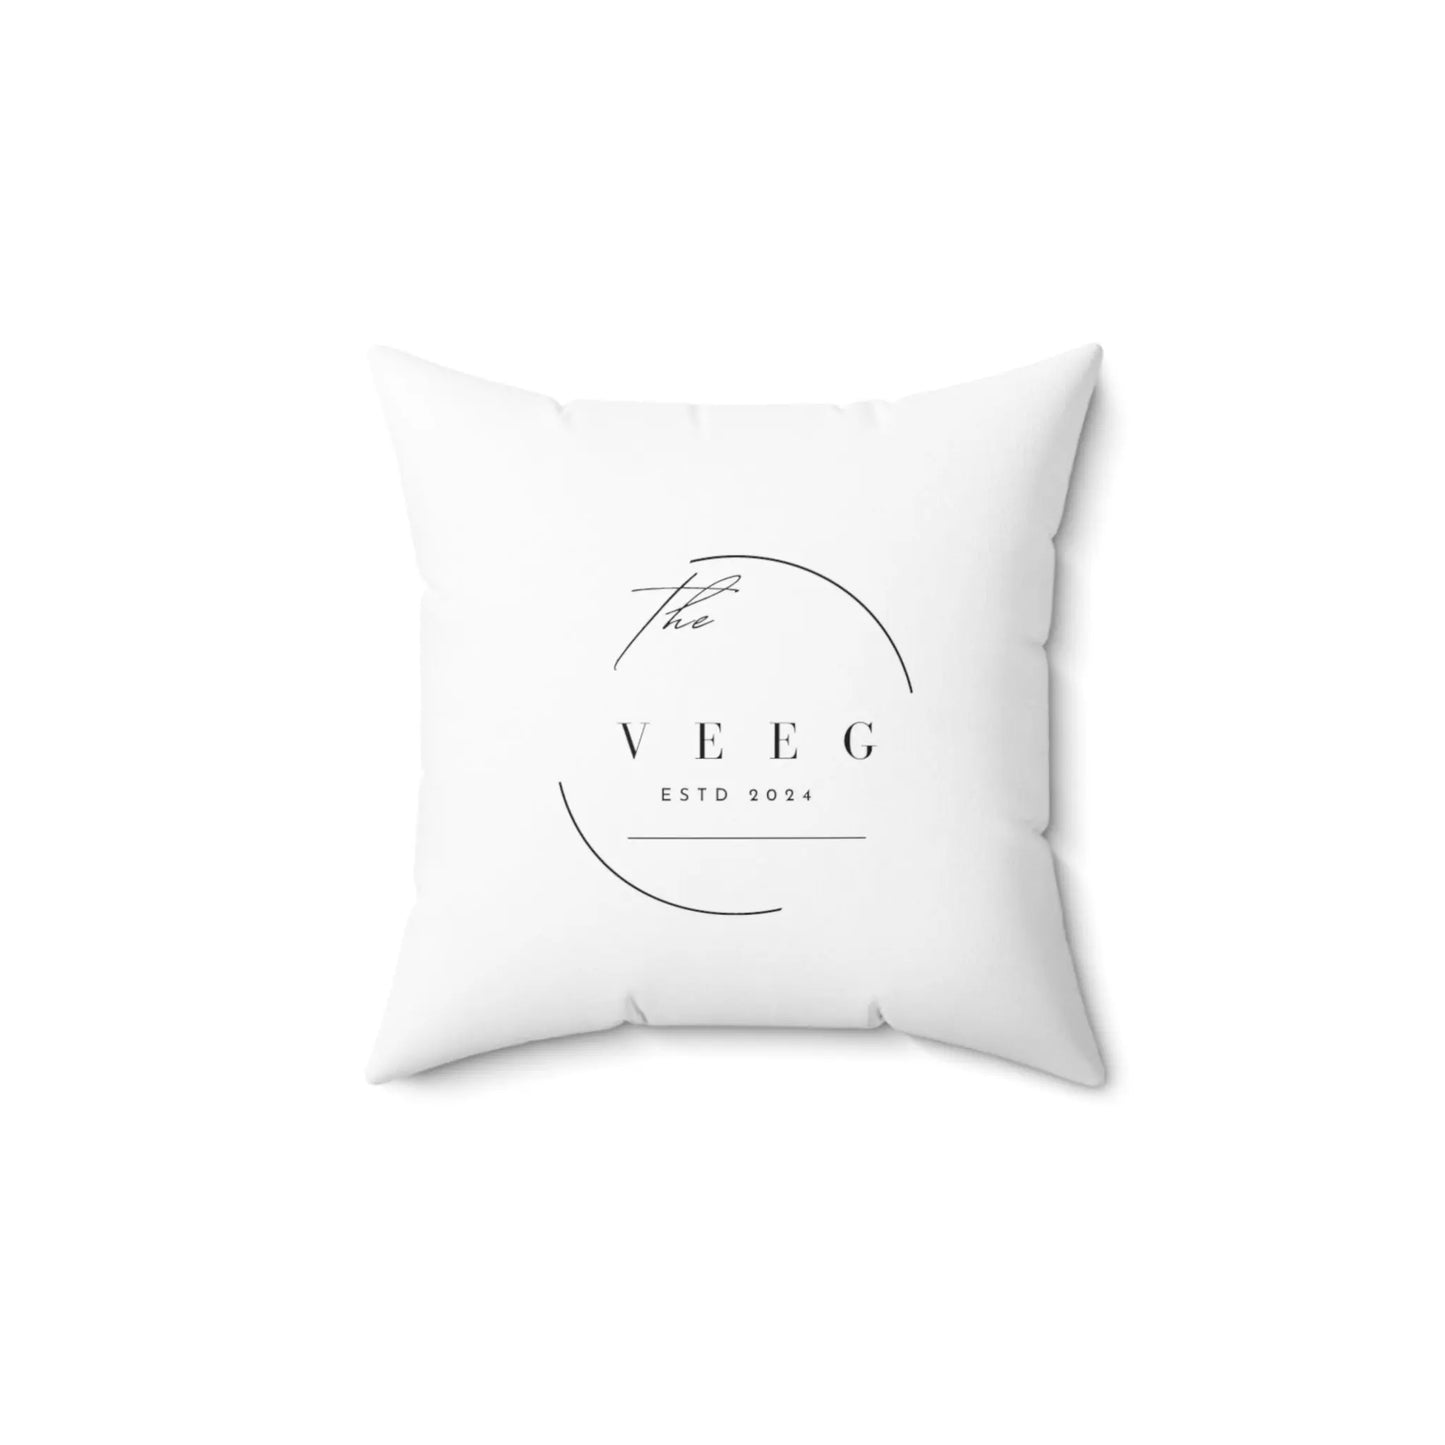 Spun Polyester Square Pillow - THE VEEG